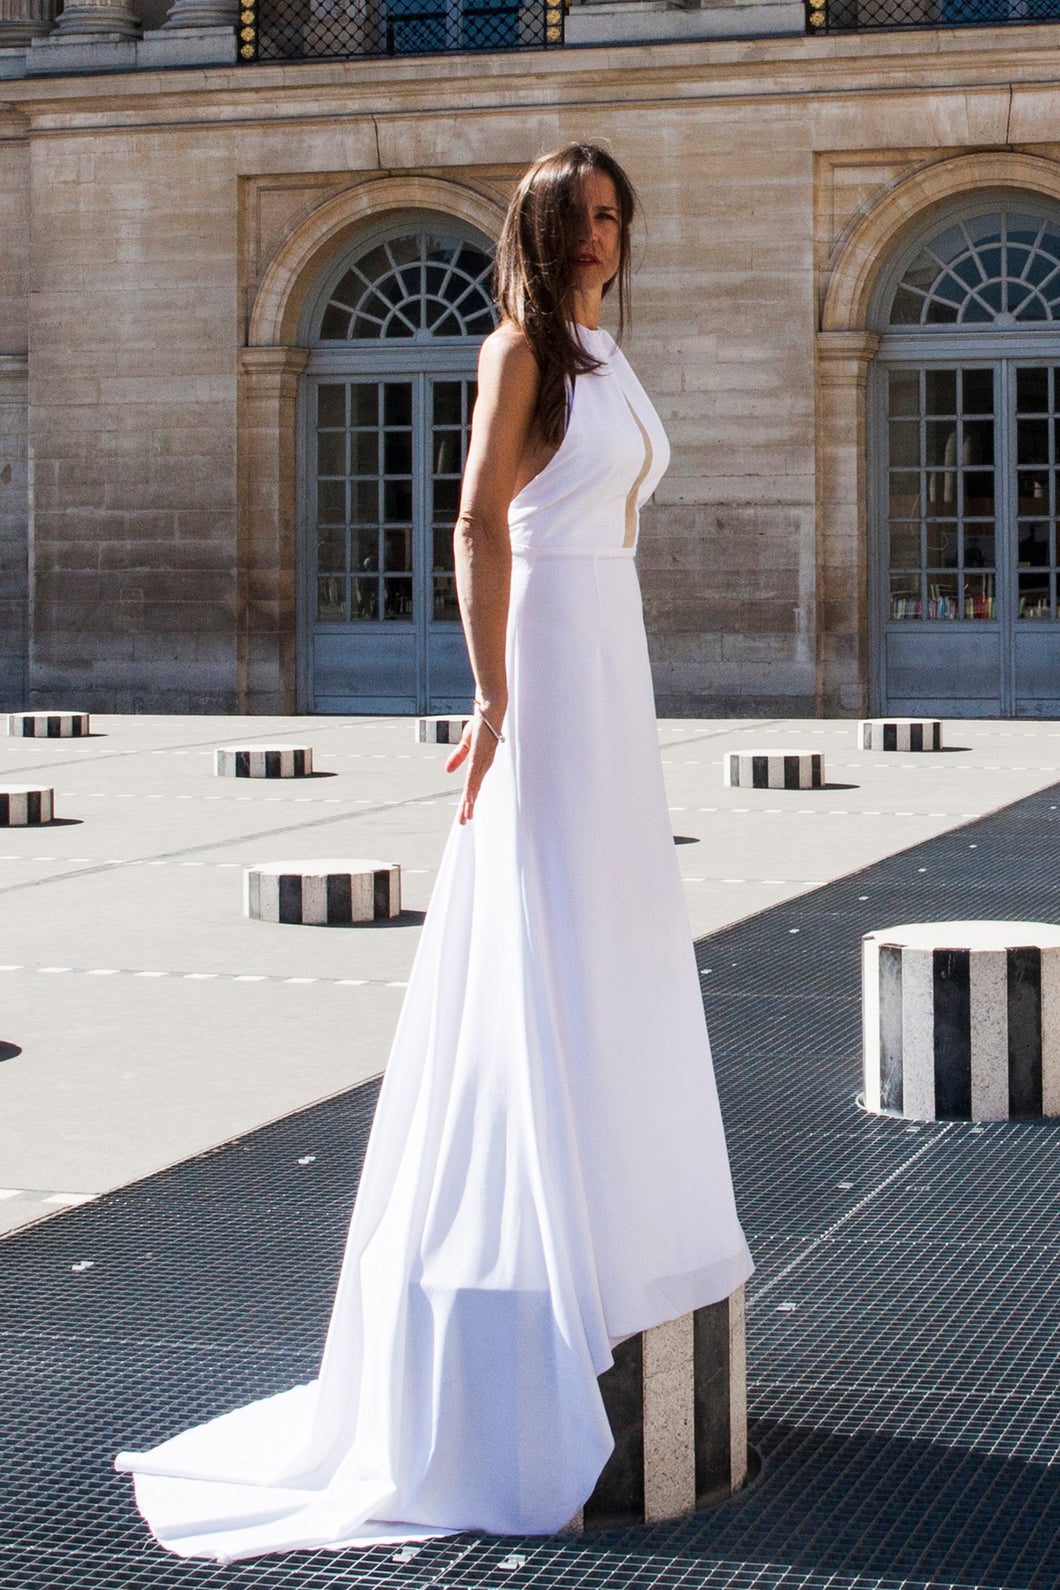 Model in Paris, full length, standing on platform wearing low back wedding dress.